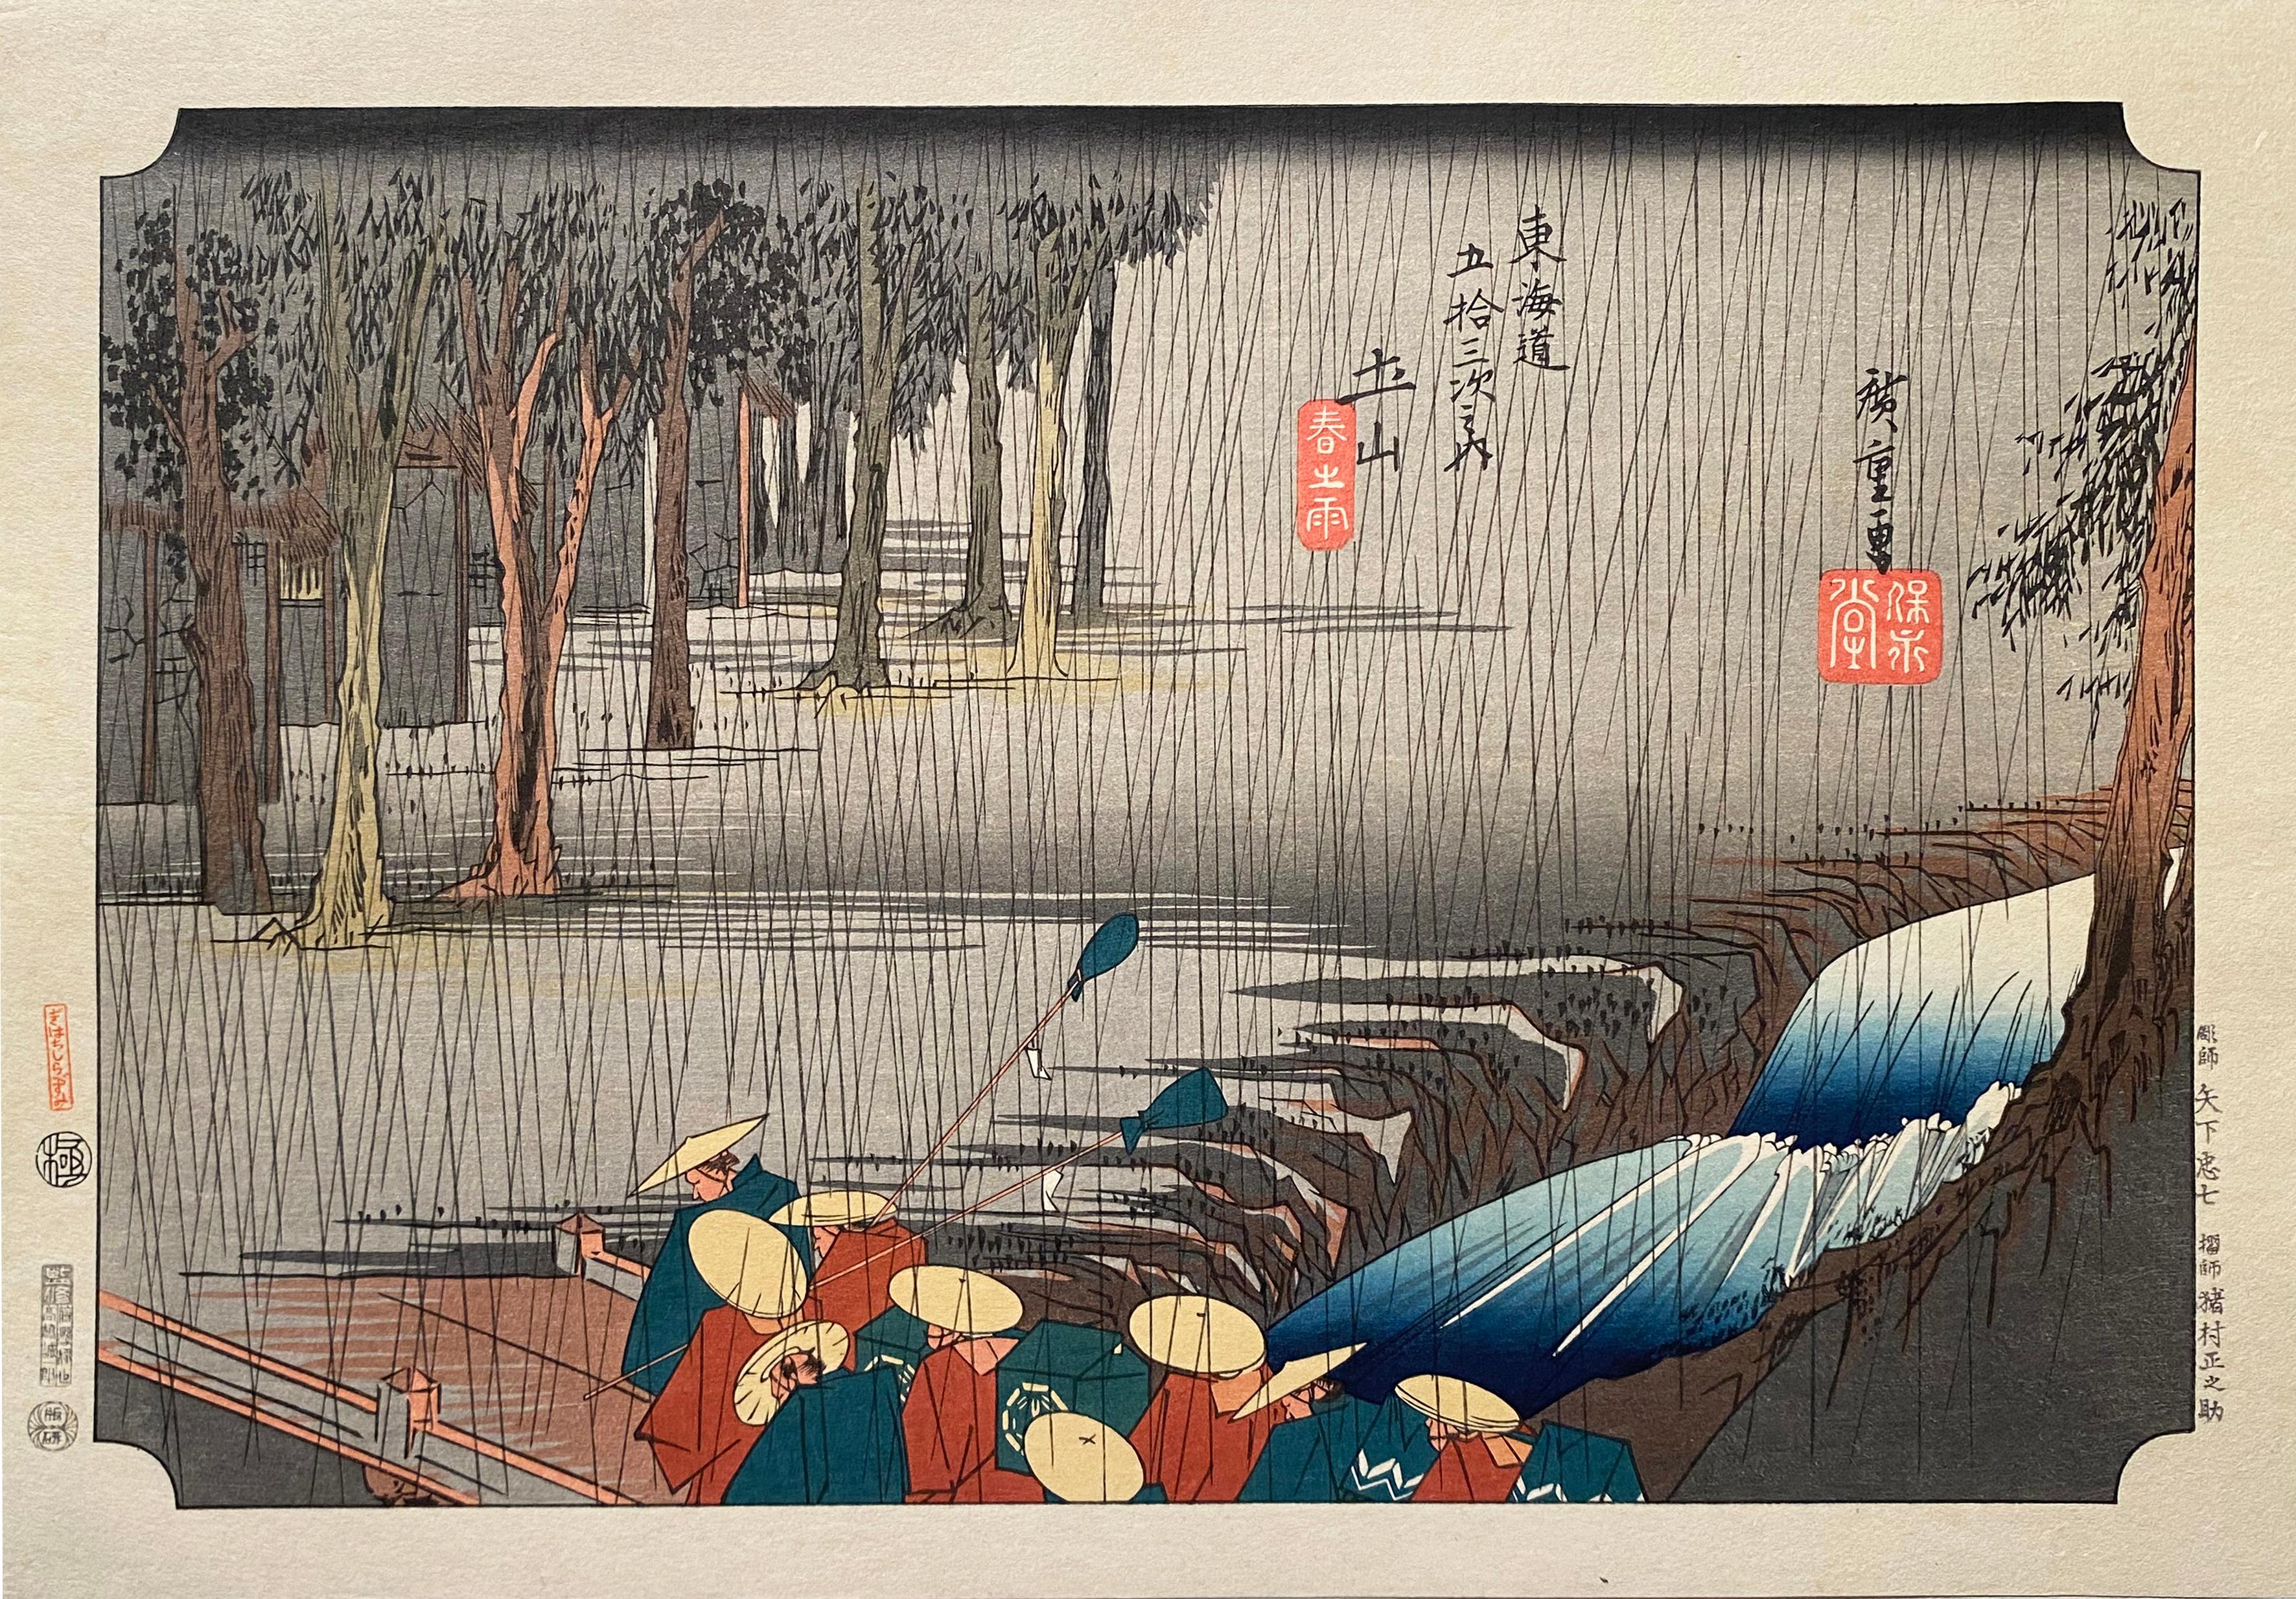 Landscape Print Utagawa Hiroshige (Ando Hiroshige) - Vue de Tsuchiyama, d'après Utagawa Hiroshige 歌川廣重, gravure sur bois Ukiyo-e, Tokaido